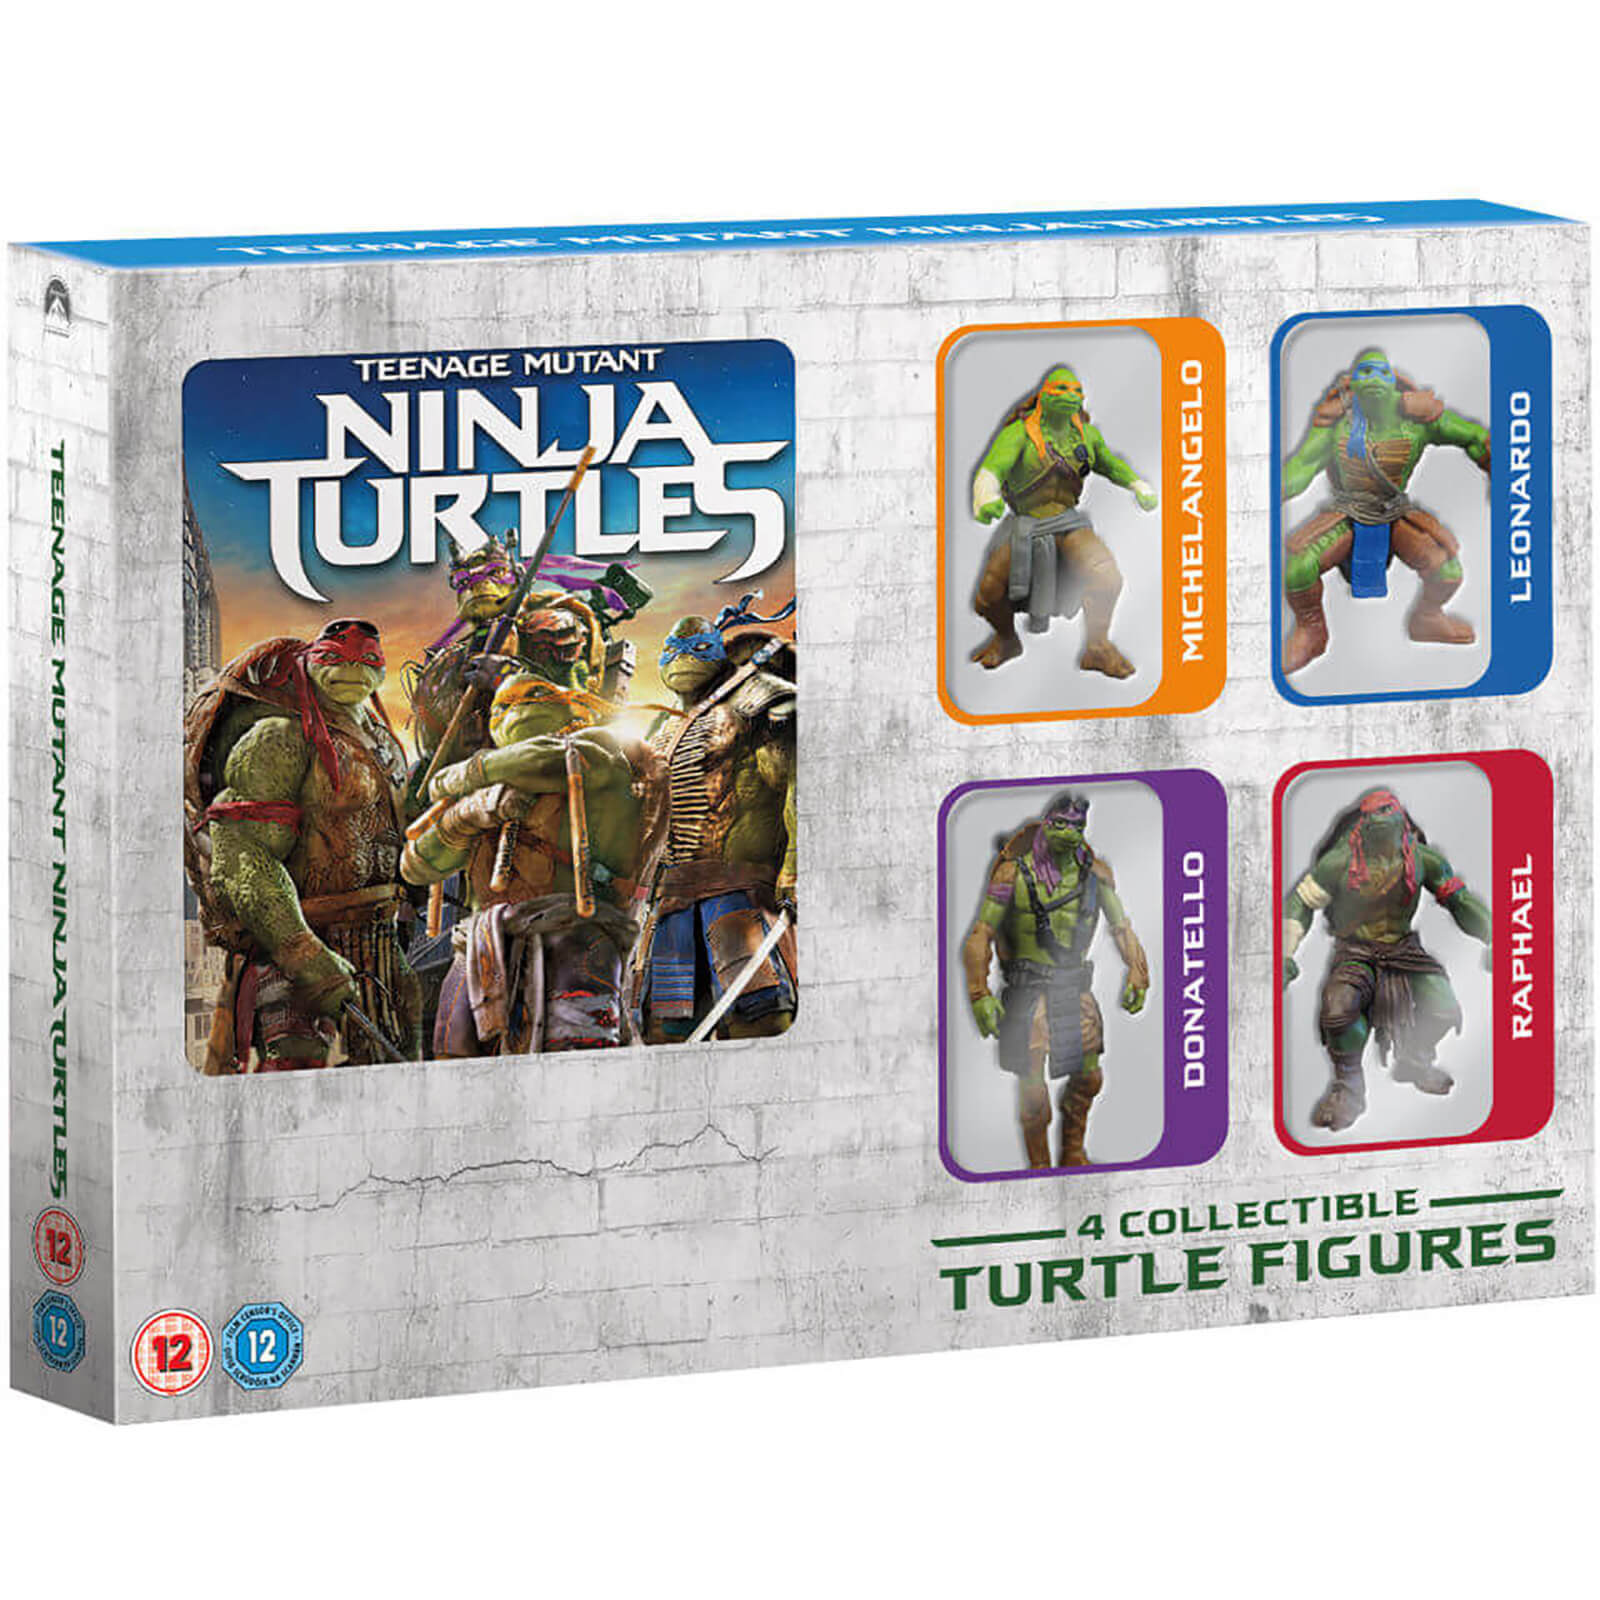 Teenage Mutant Ninja Turtles - Pack de figures en edition limitee exclusif a Zavvi